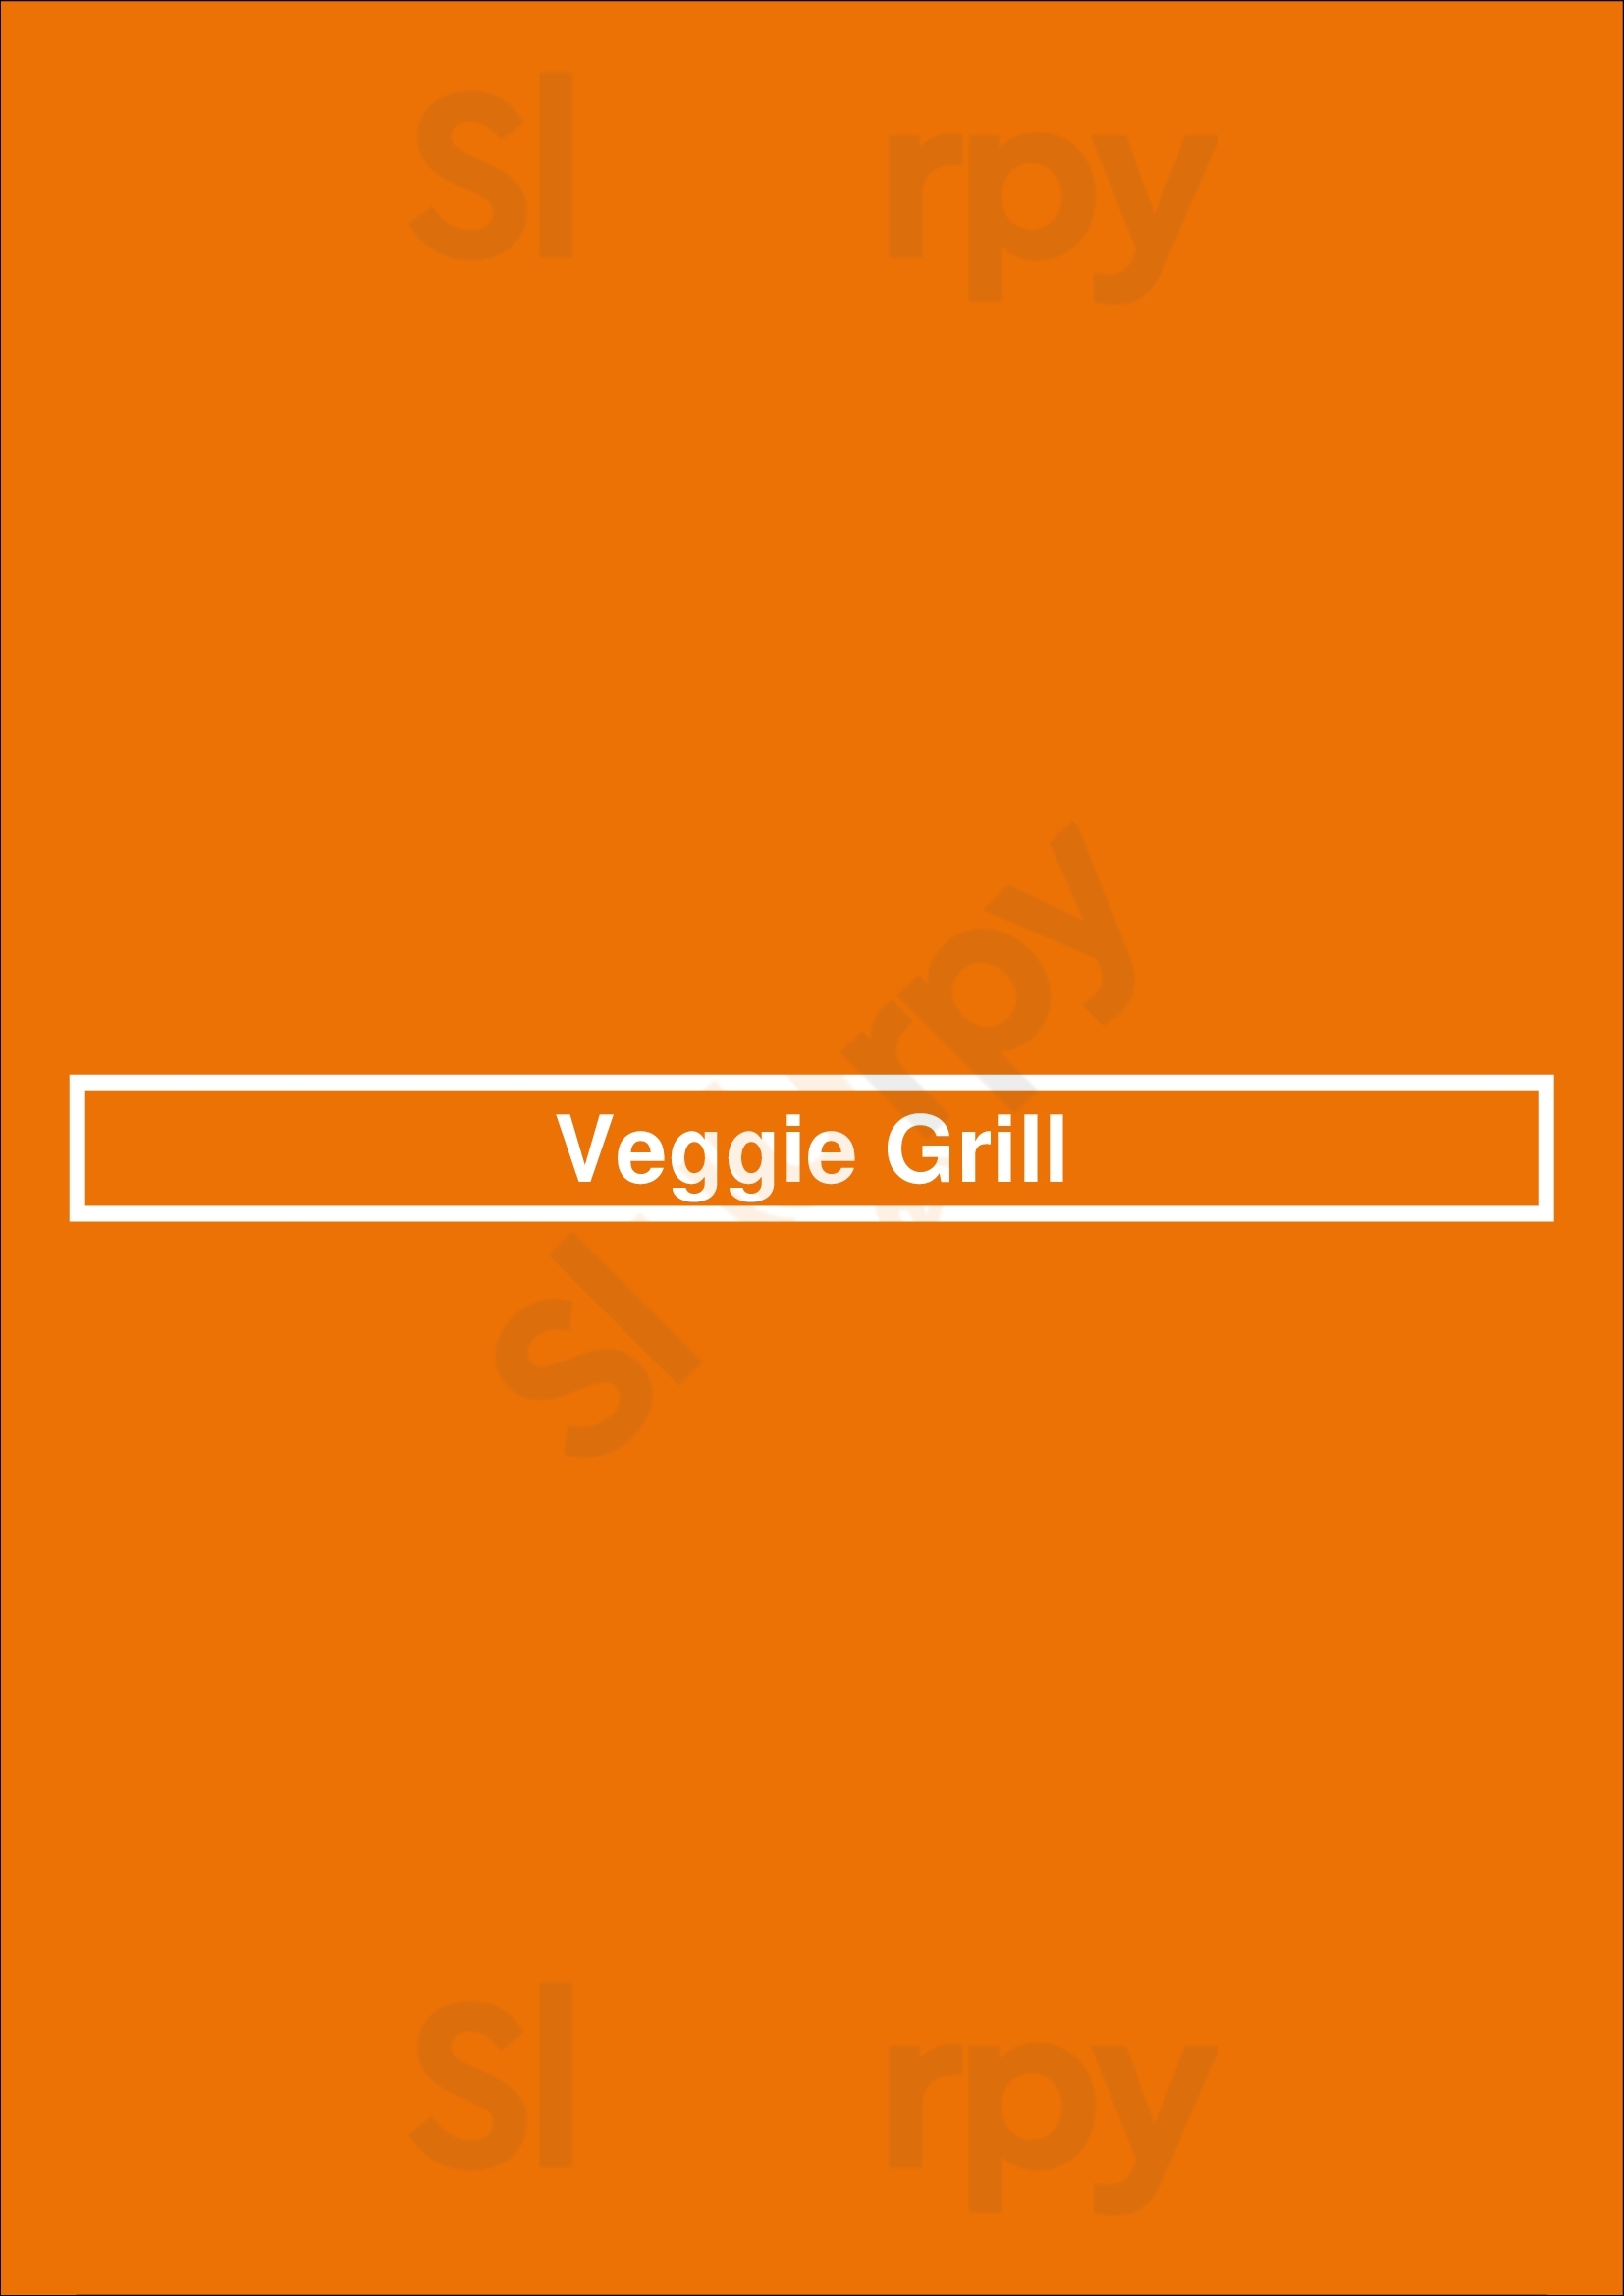 Veggie Grill Torrance Menu - 1